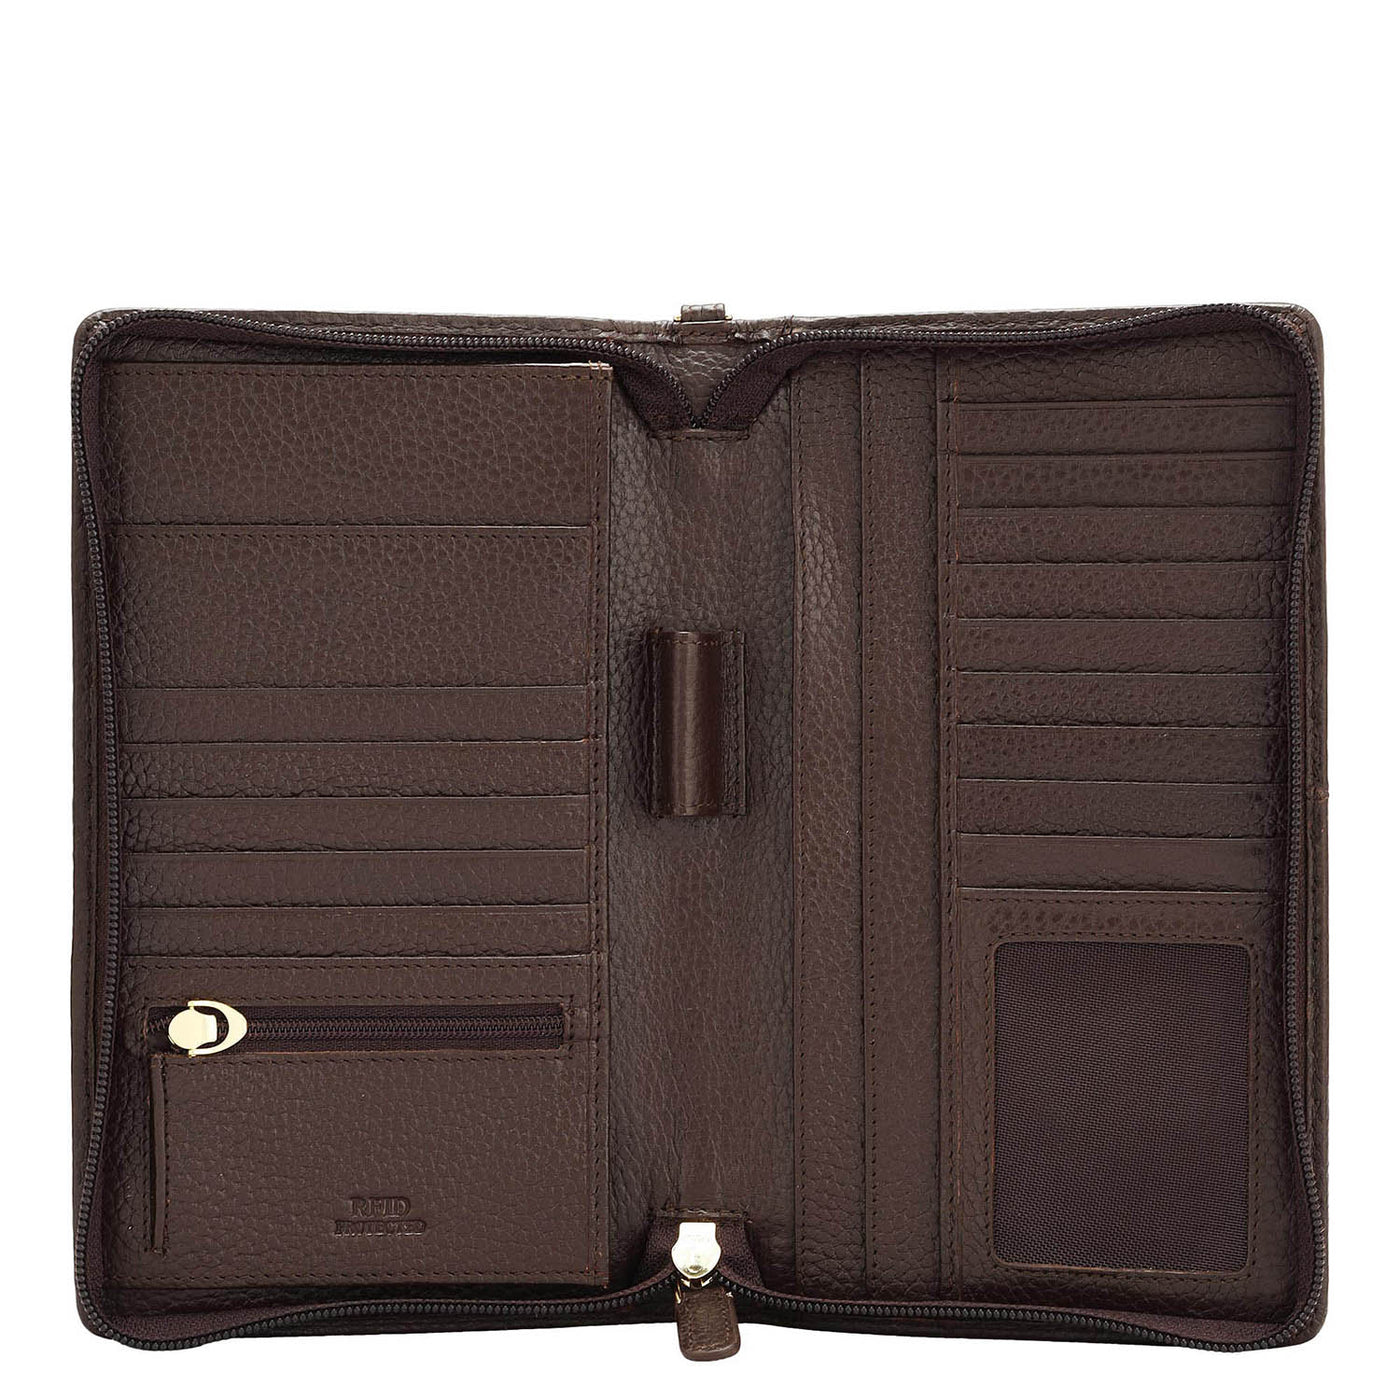 Wax Leather Passport Case - Chocolate